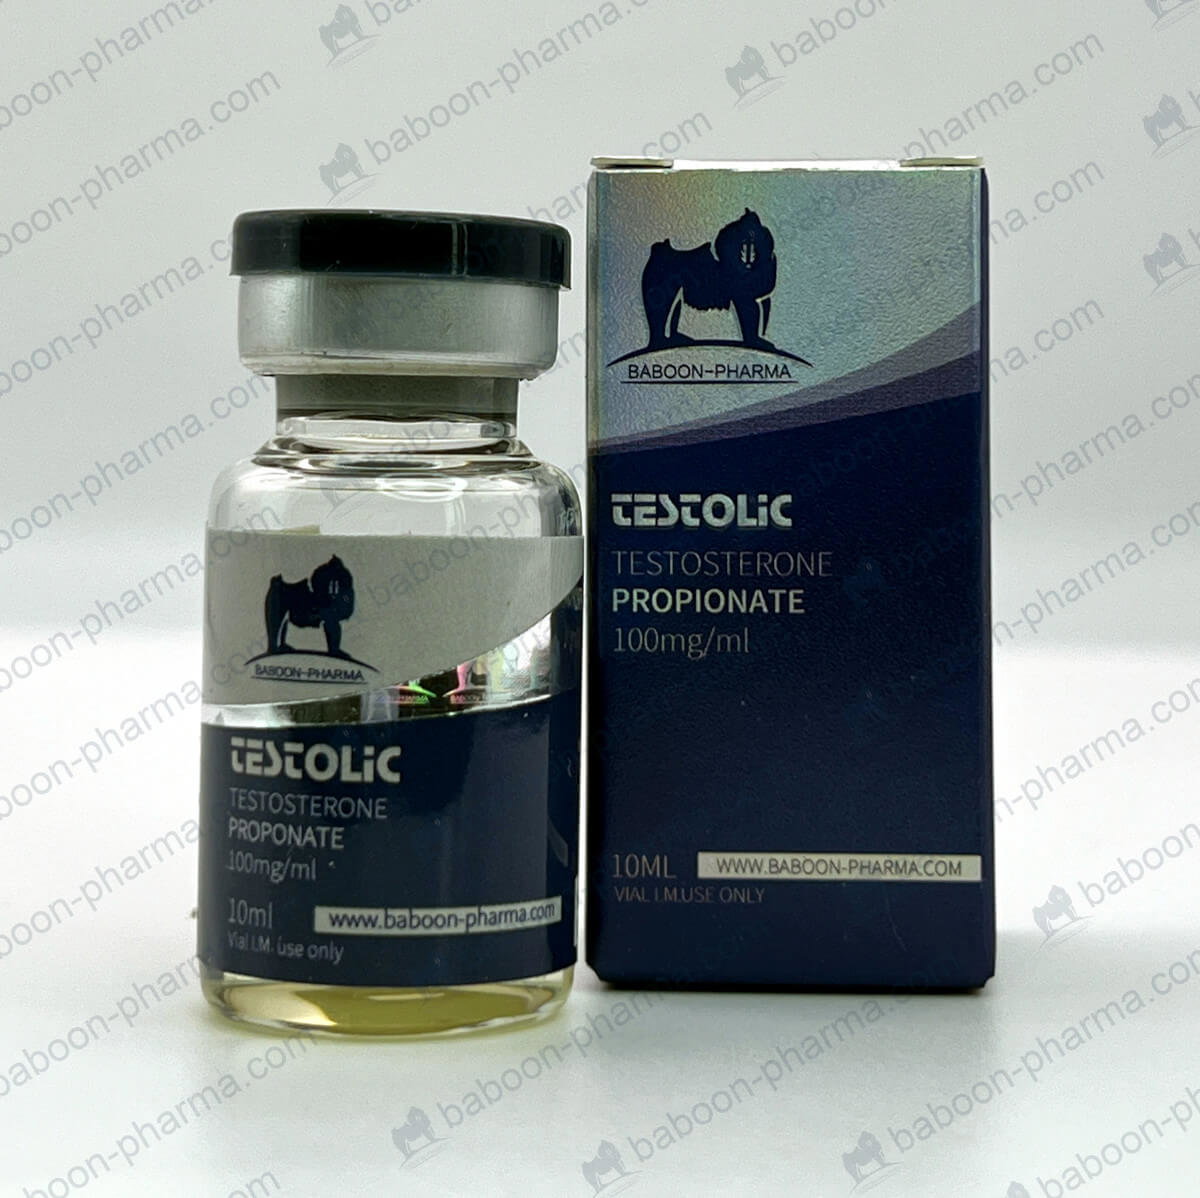 Babouin-Pharma-Oil_Testolic_1